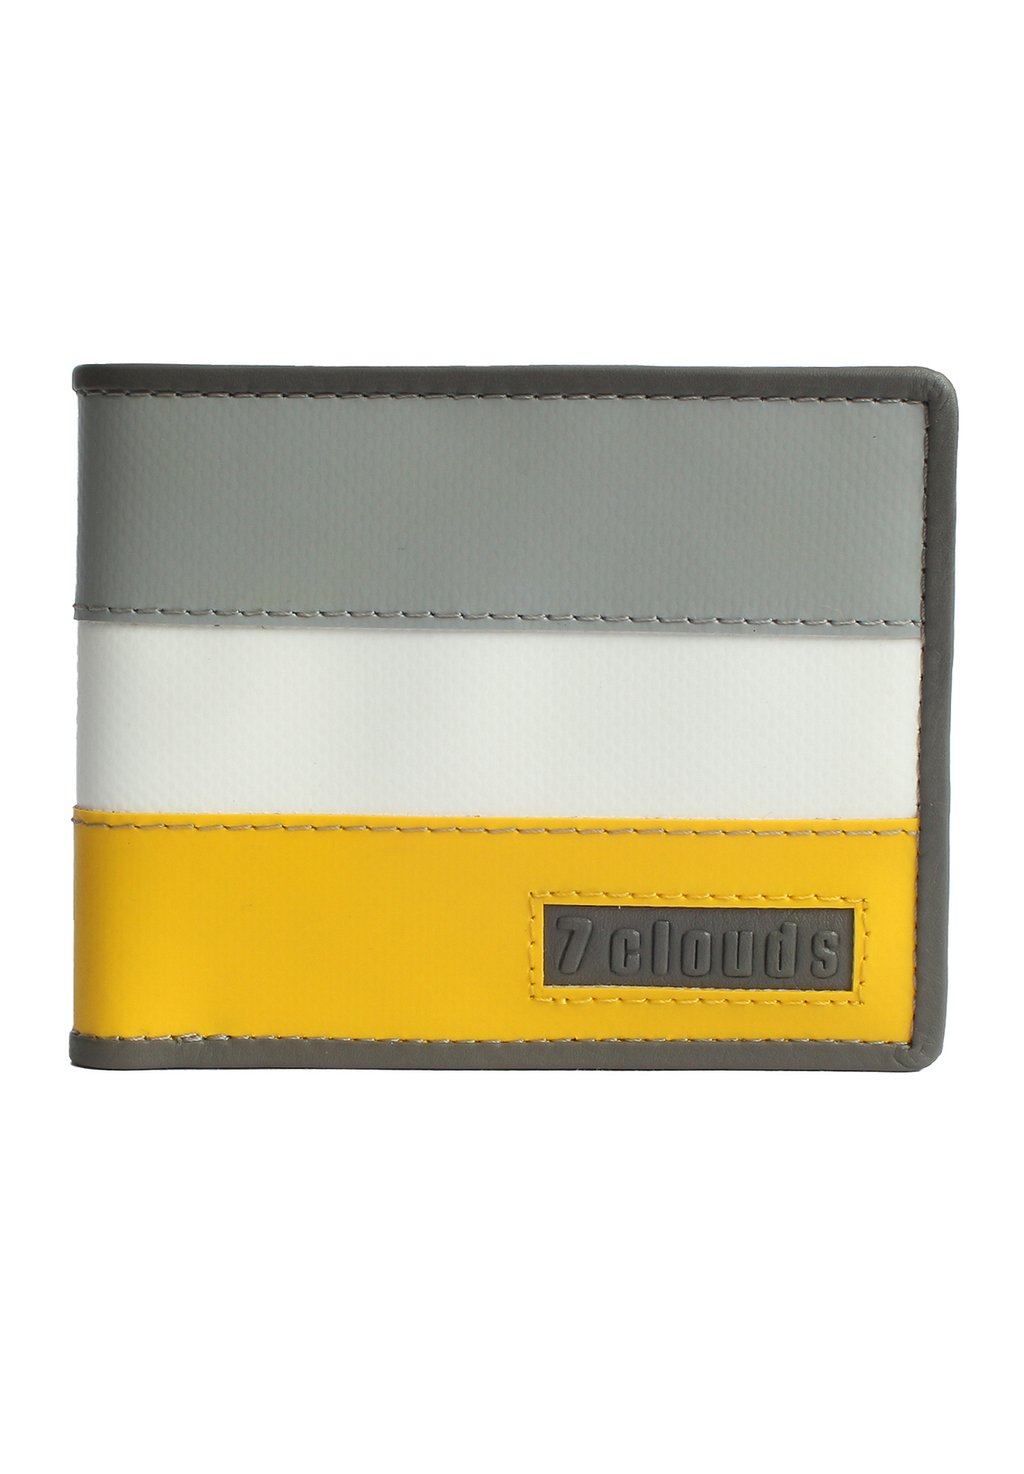 Кошелек RFID-MEKUN 7 1 7Clouds, цвет yellow white grey